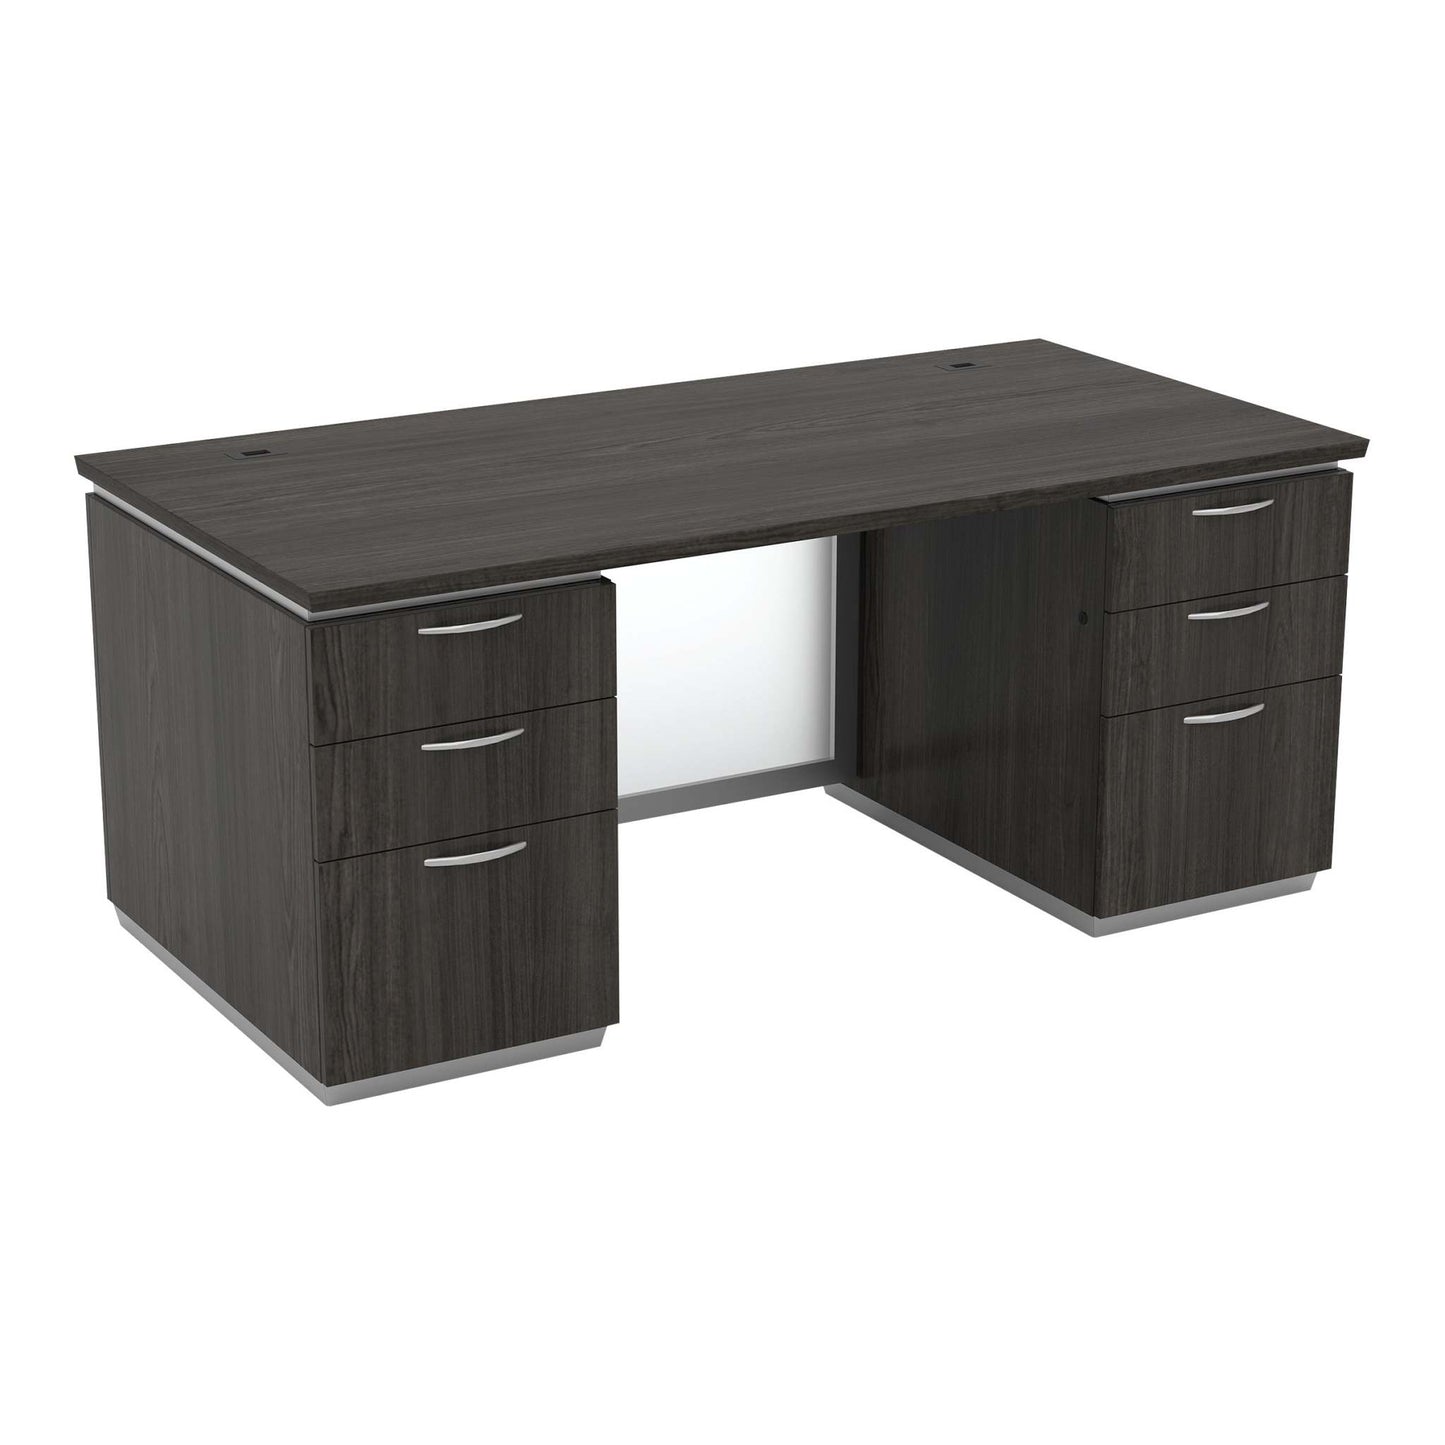 New Tuxedo Series Double Pedestal Desk by Office Star